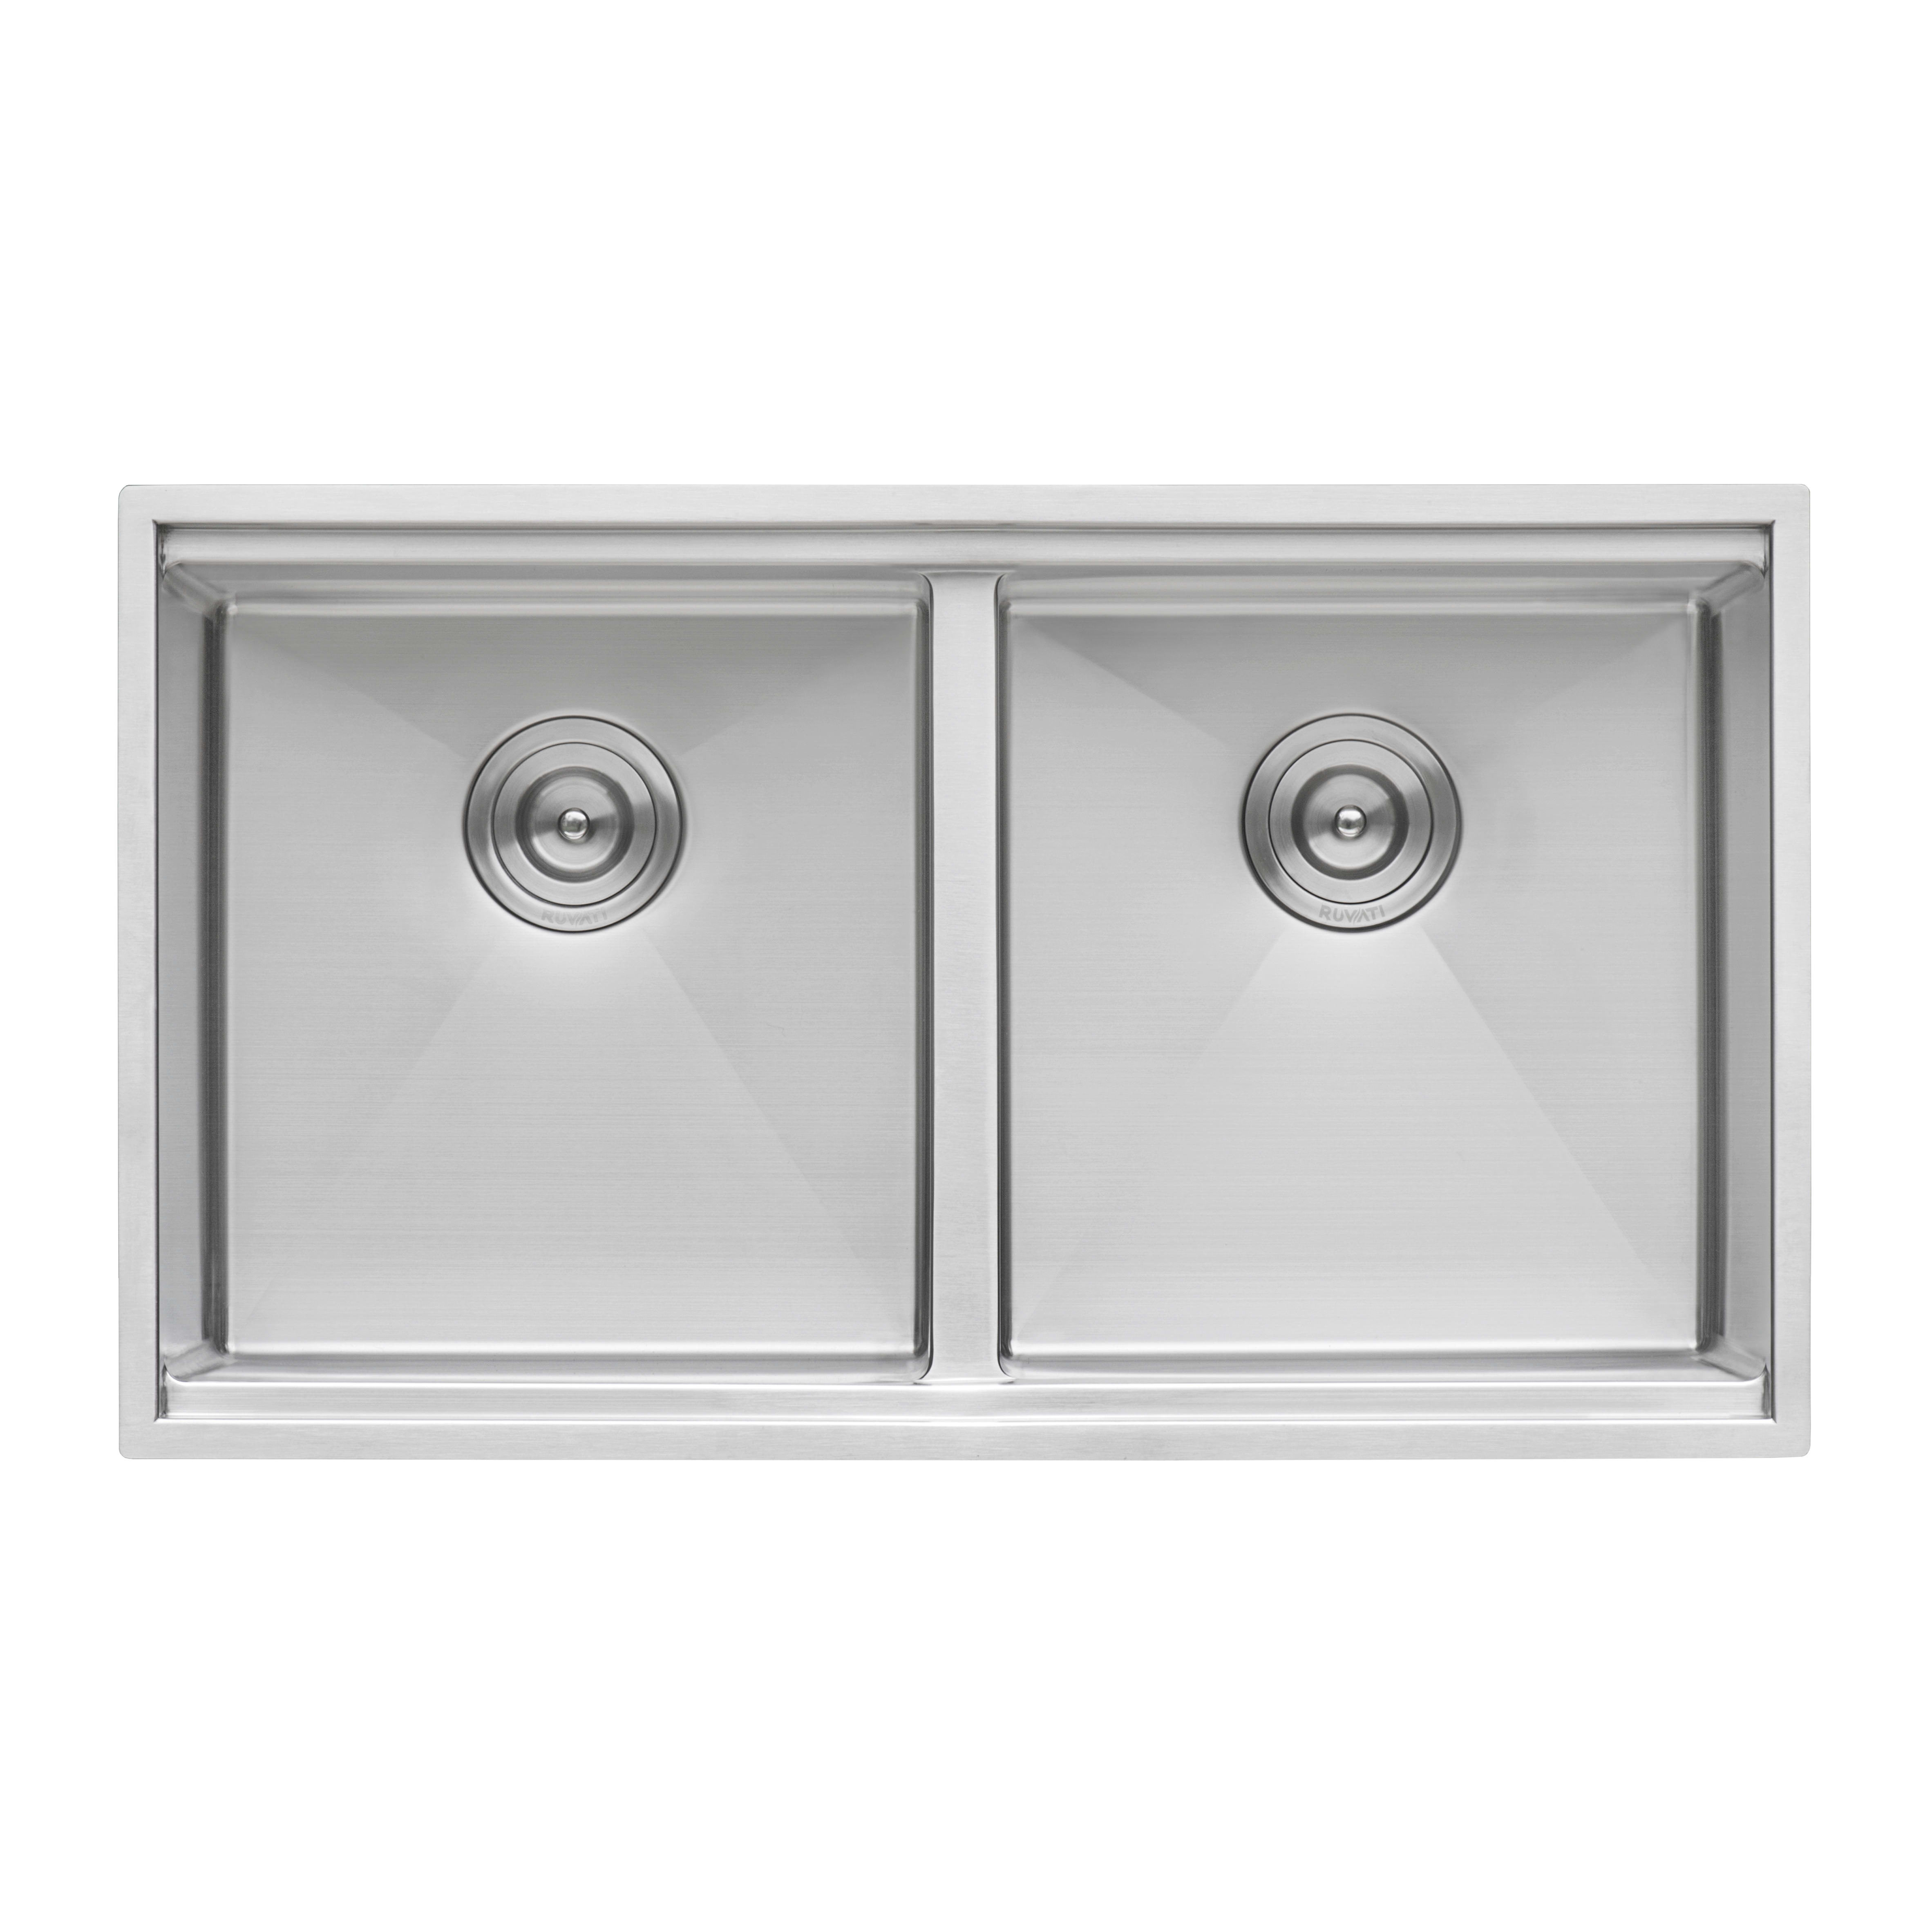 Ruvati Rvh8351 Stainless Steel Urbana 33 Undermount Double Basin Stainless Steel Kitchen Sink Faucetdirect Com